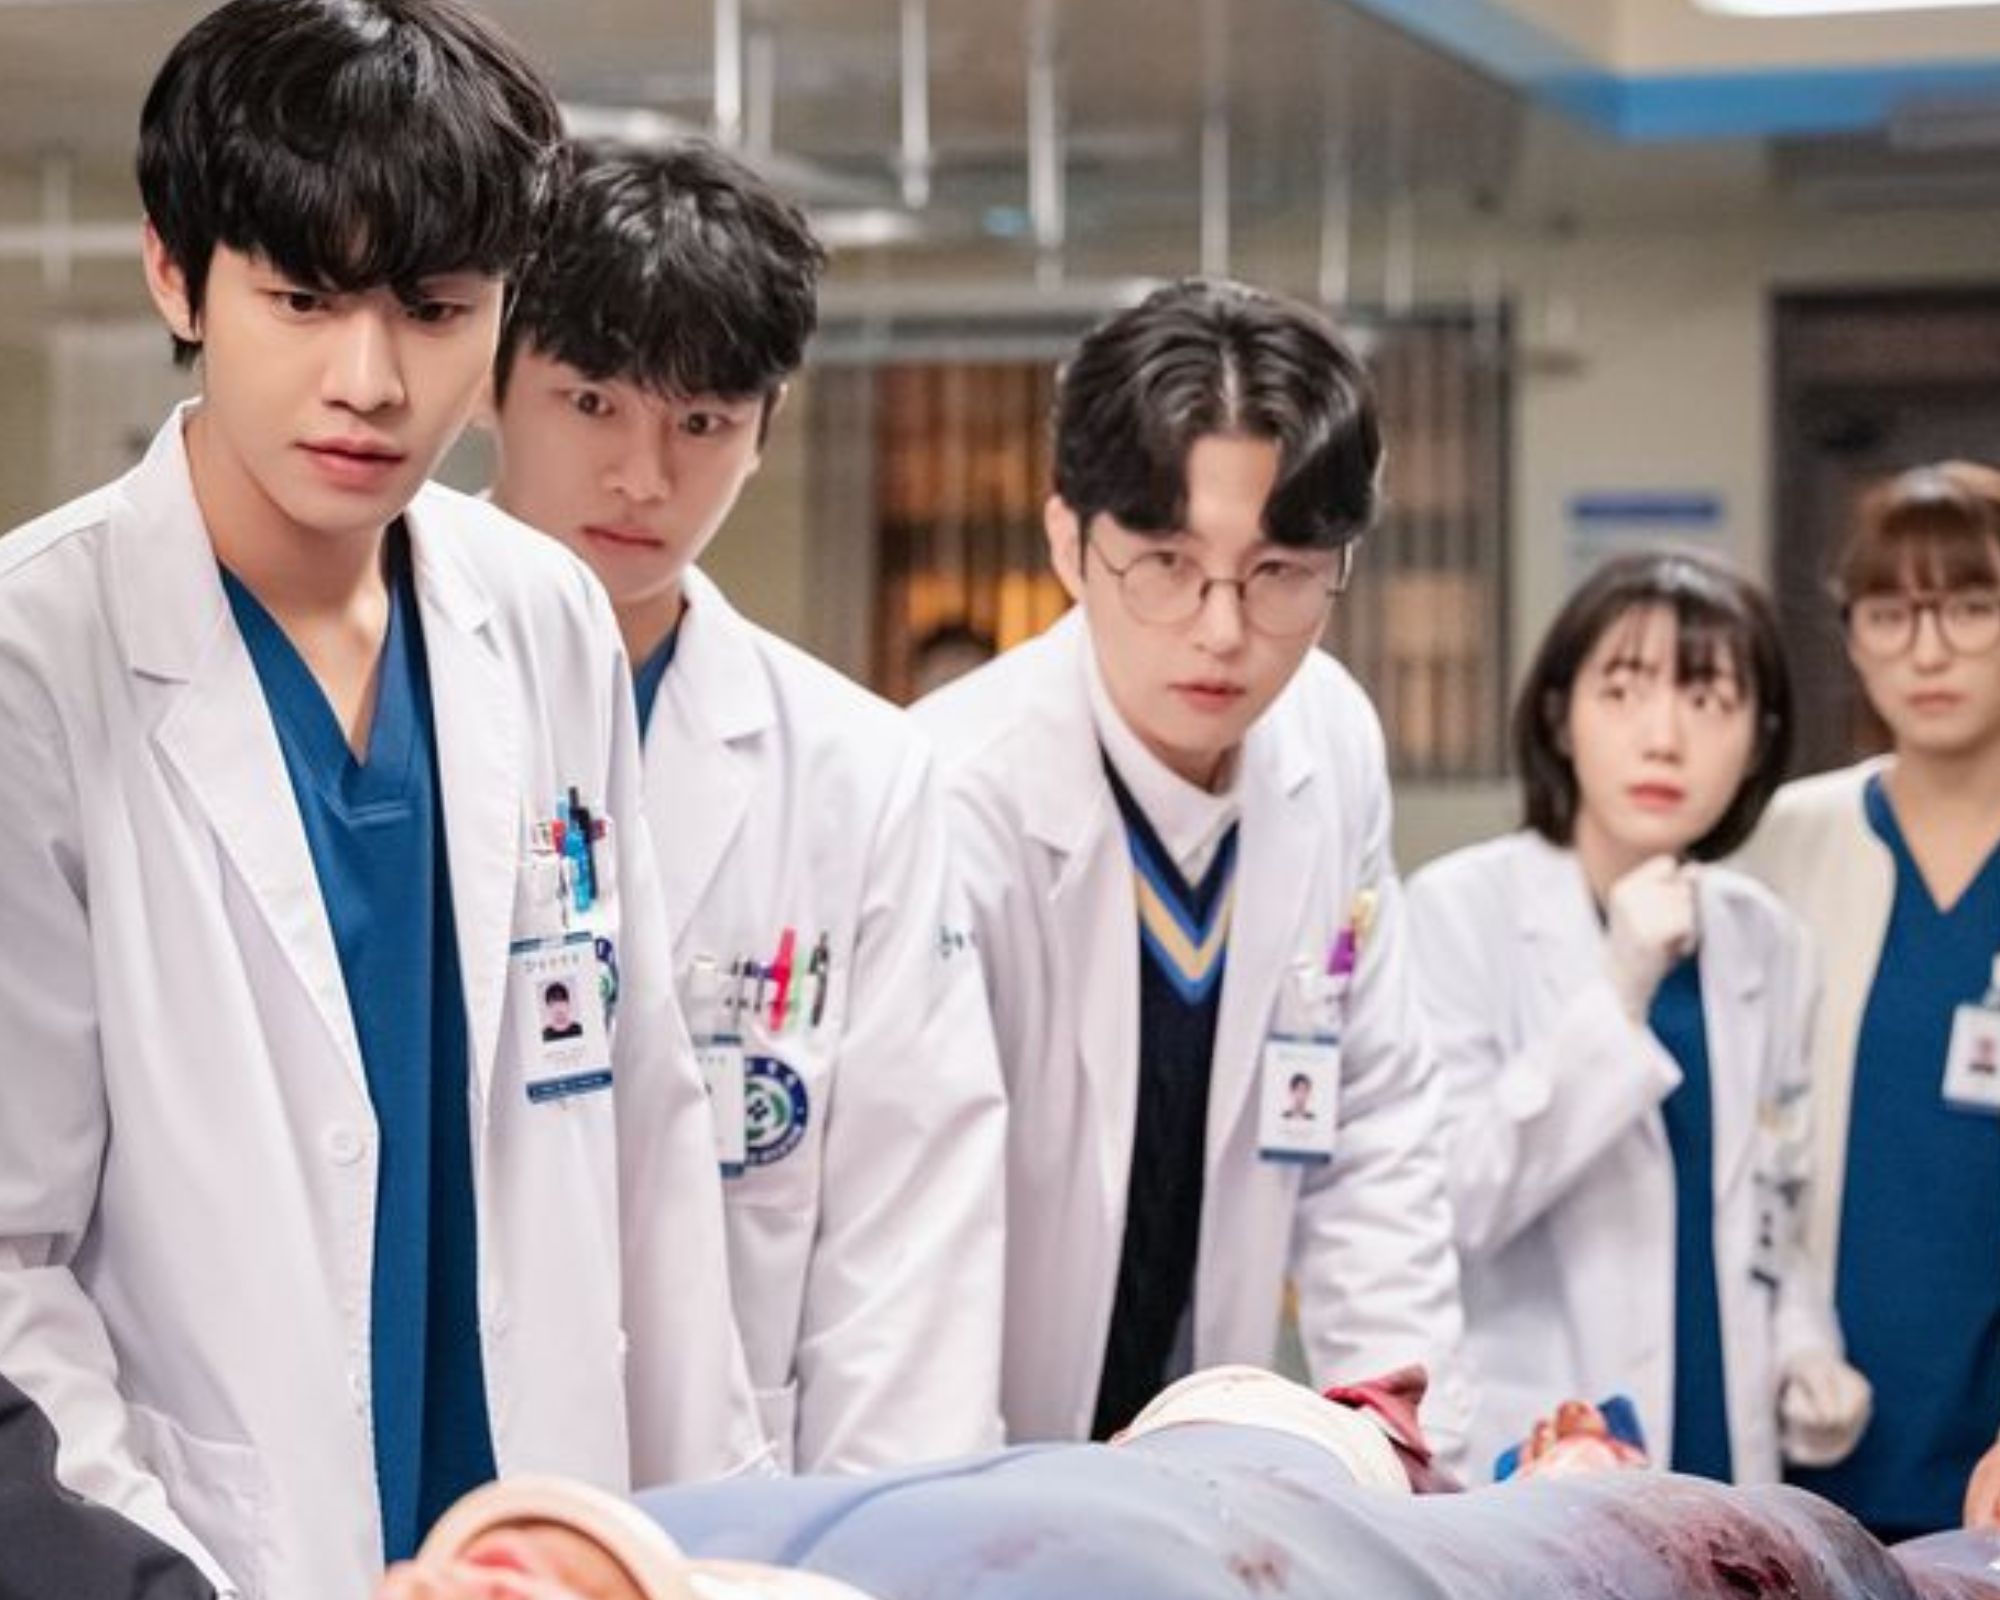 Dr. Romantic Season 3 - Unspoiled Review